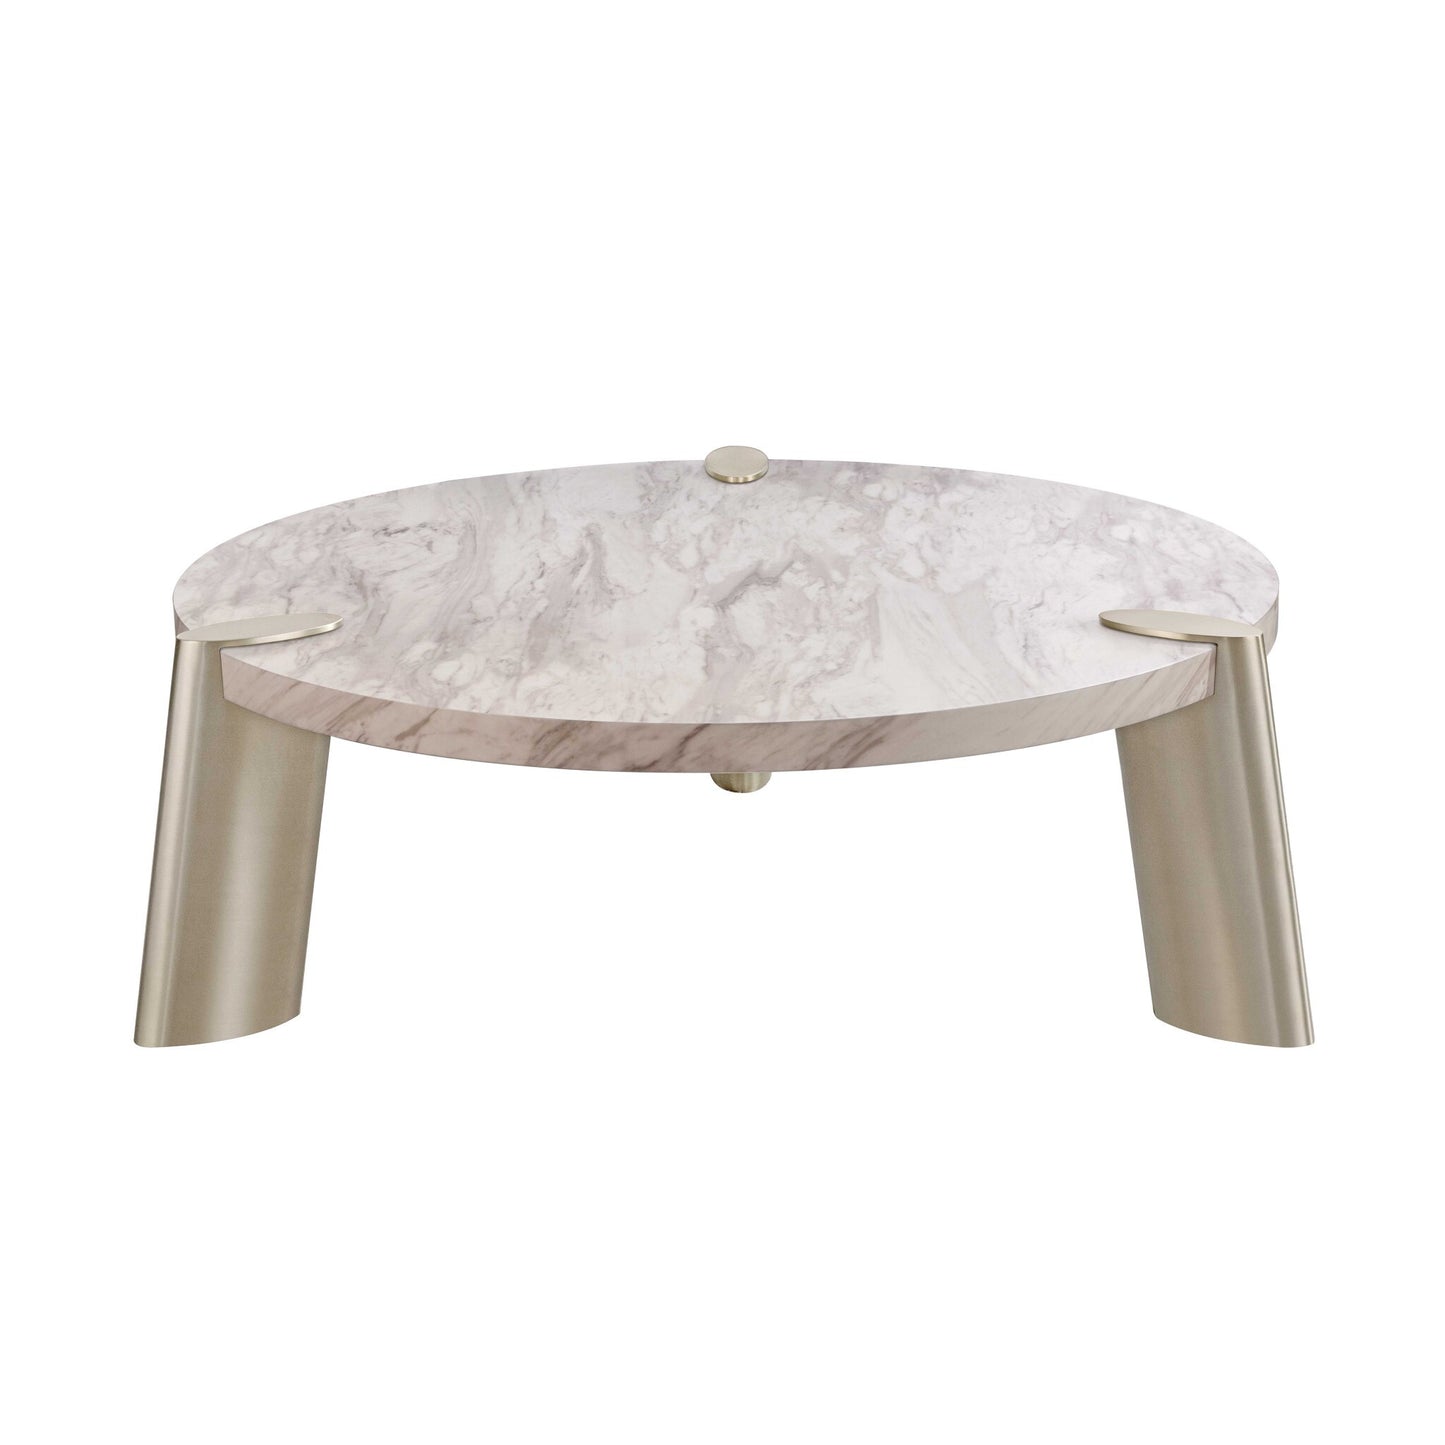 48 X 48 X 17 White Marble Coffee Table